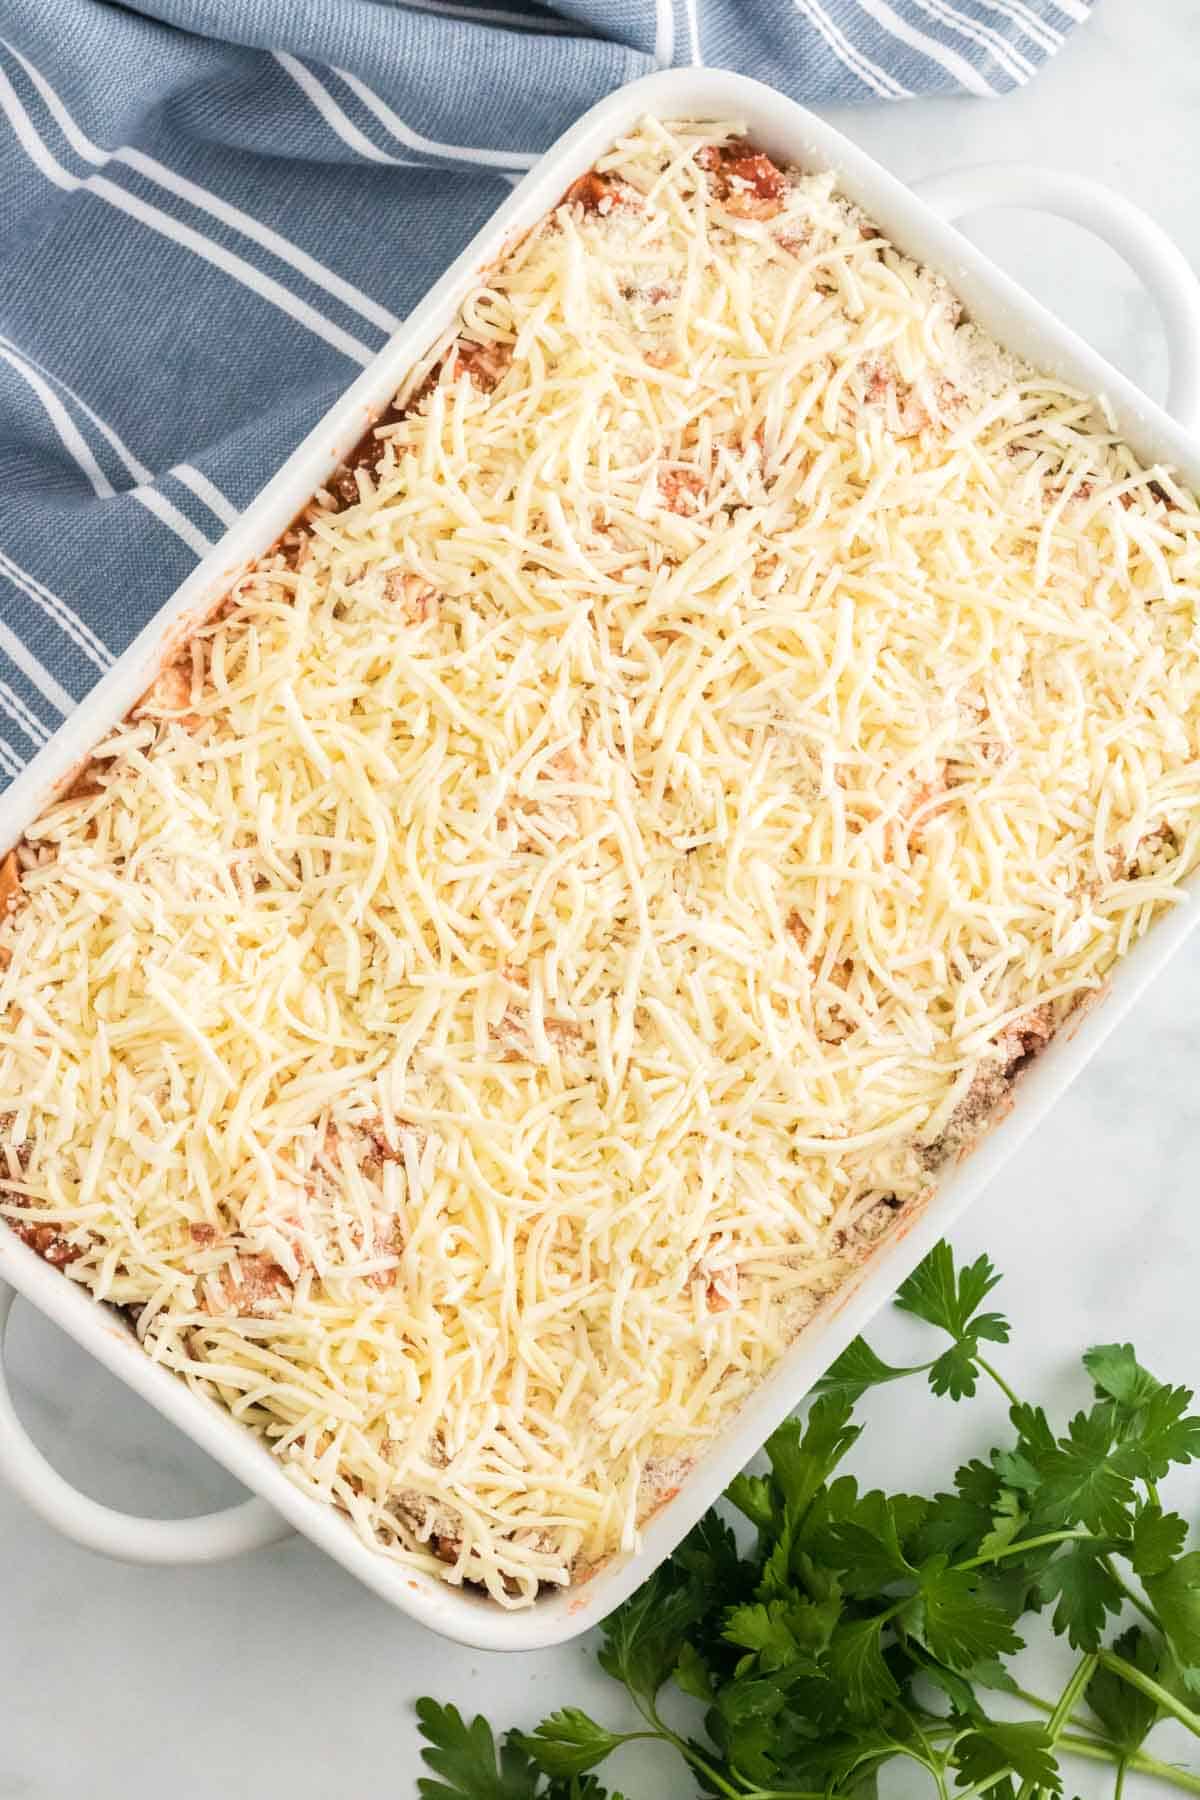 Unbaked ziti pasta casserole topped with shredded mozzarella cheese.